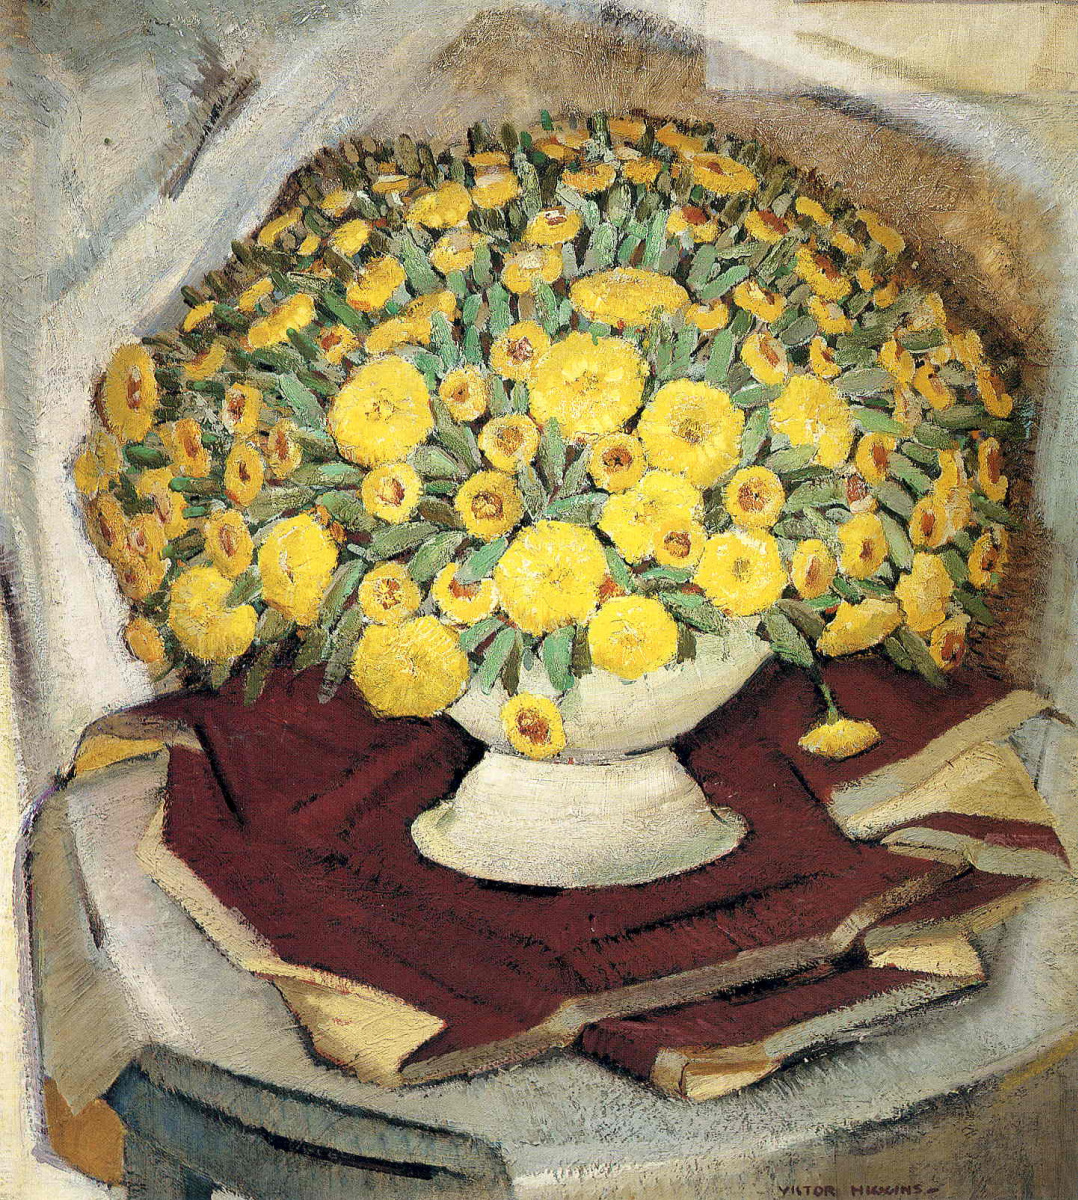 Victor Higgins. Yellow bouquet